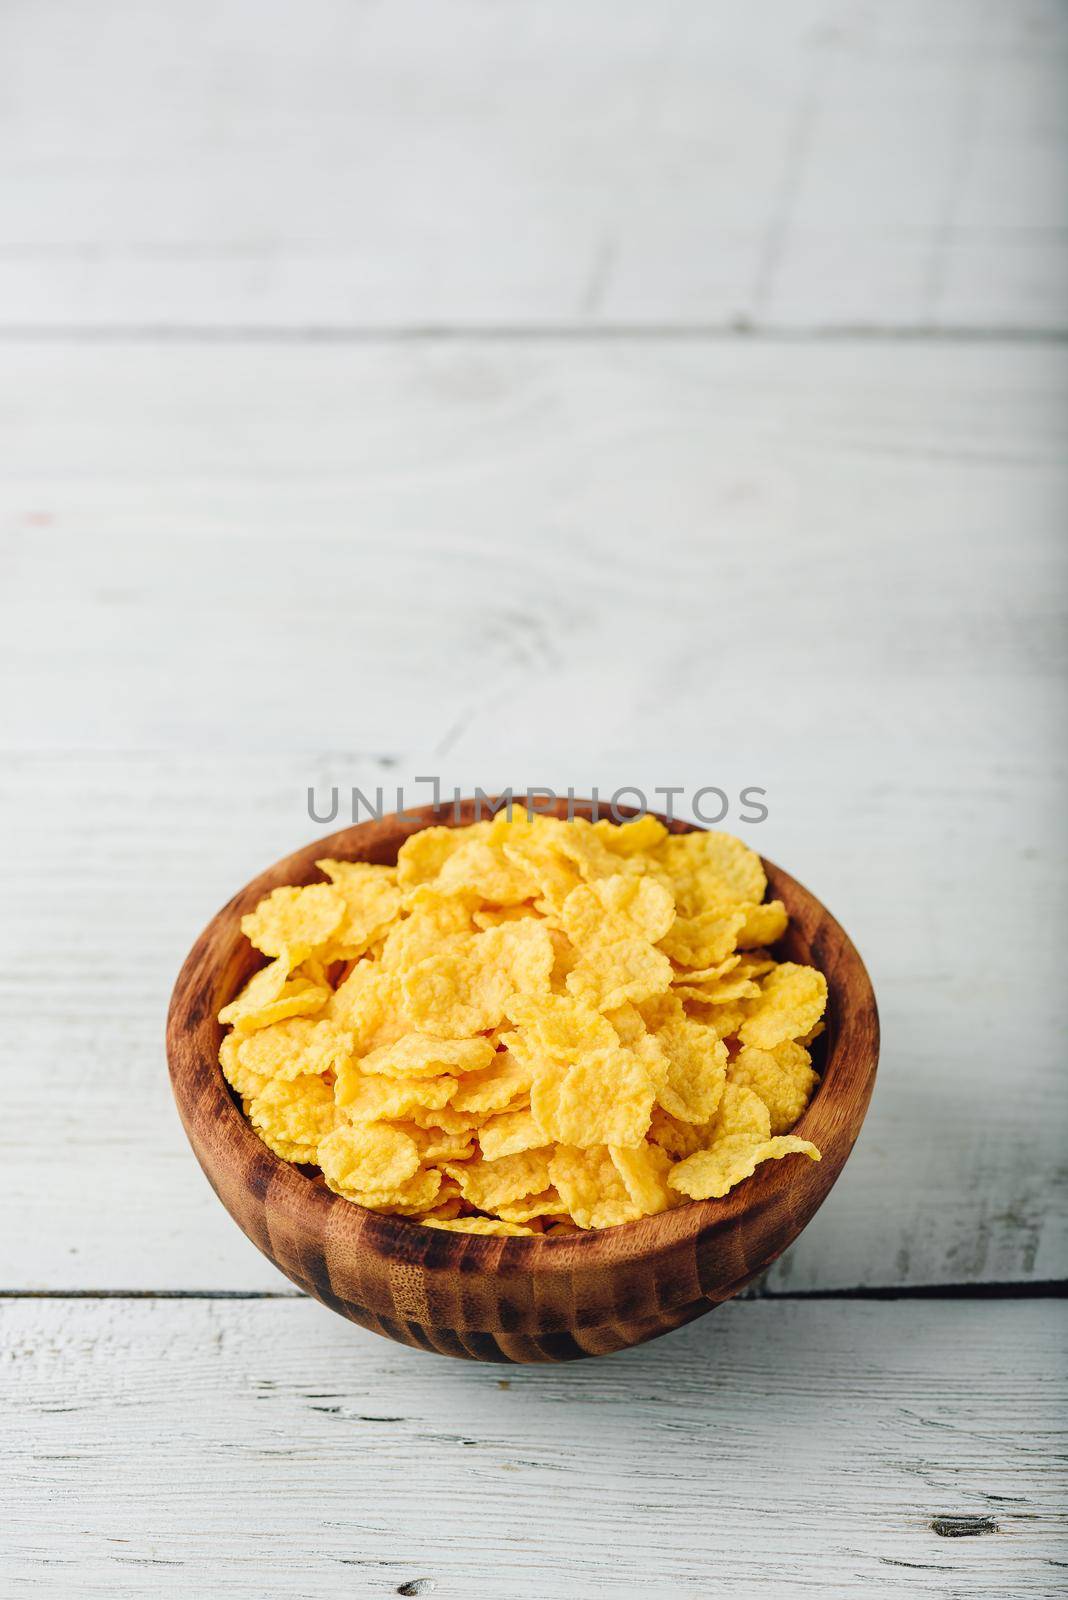 Corn flakes in a wooden bowl by Seva_blsv